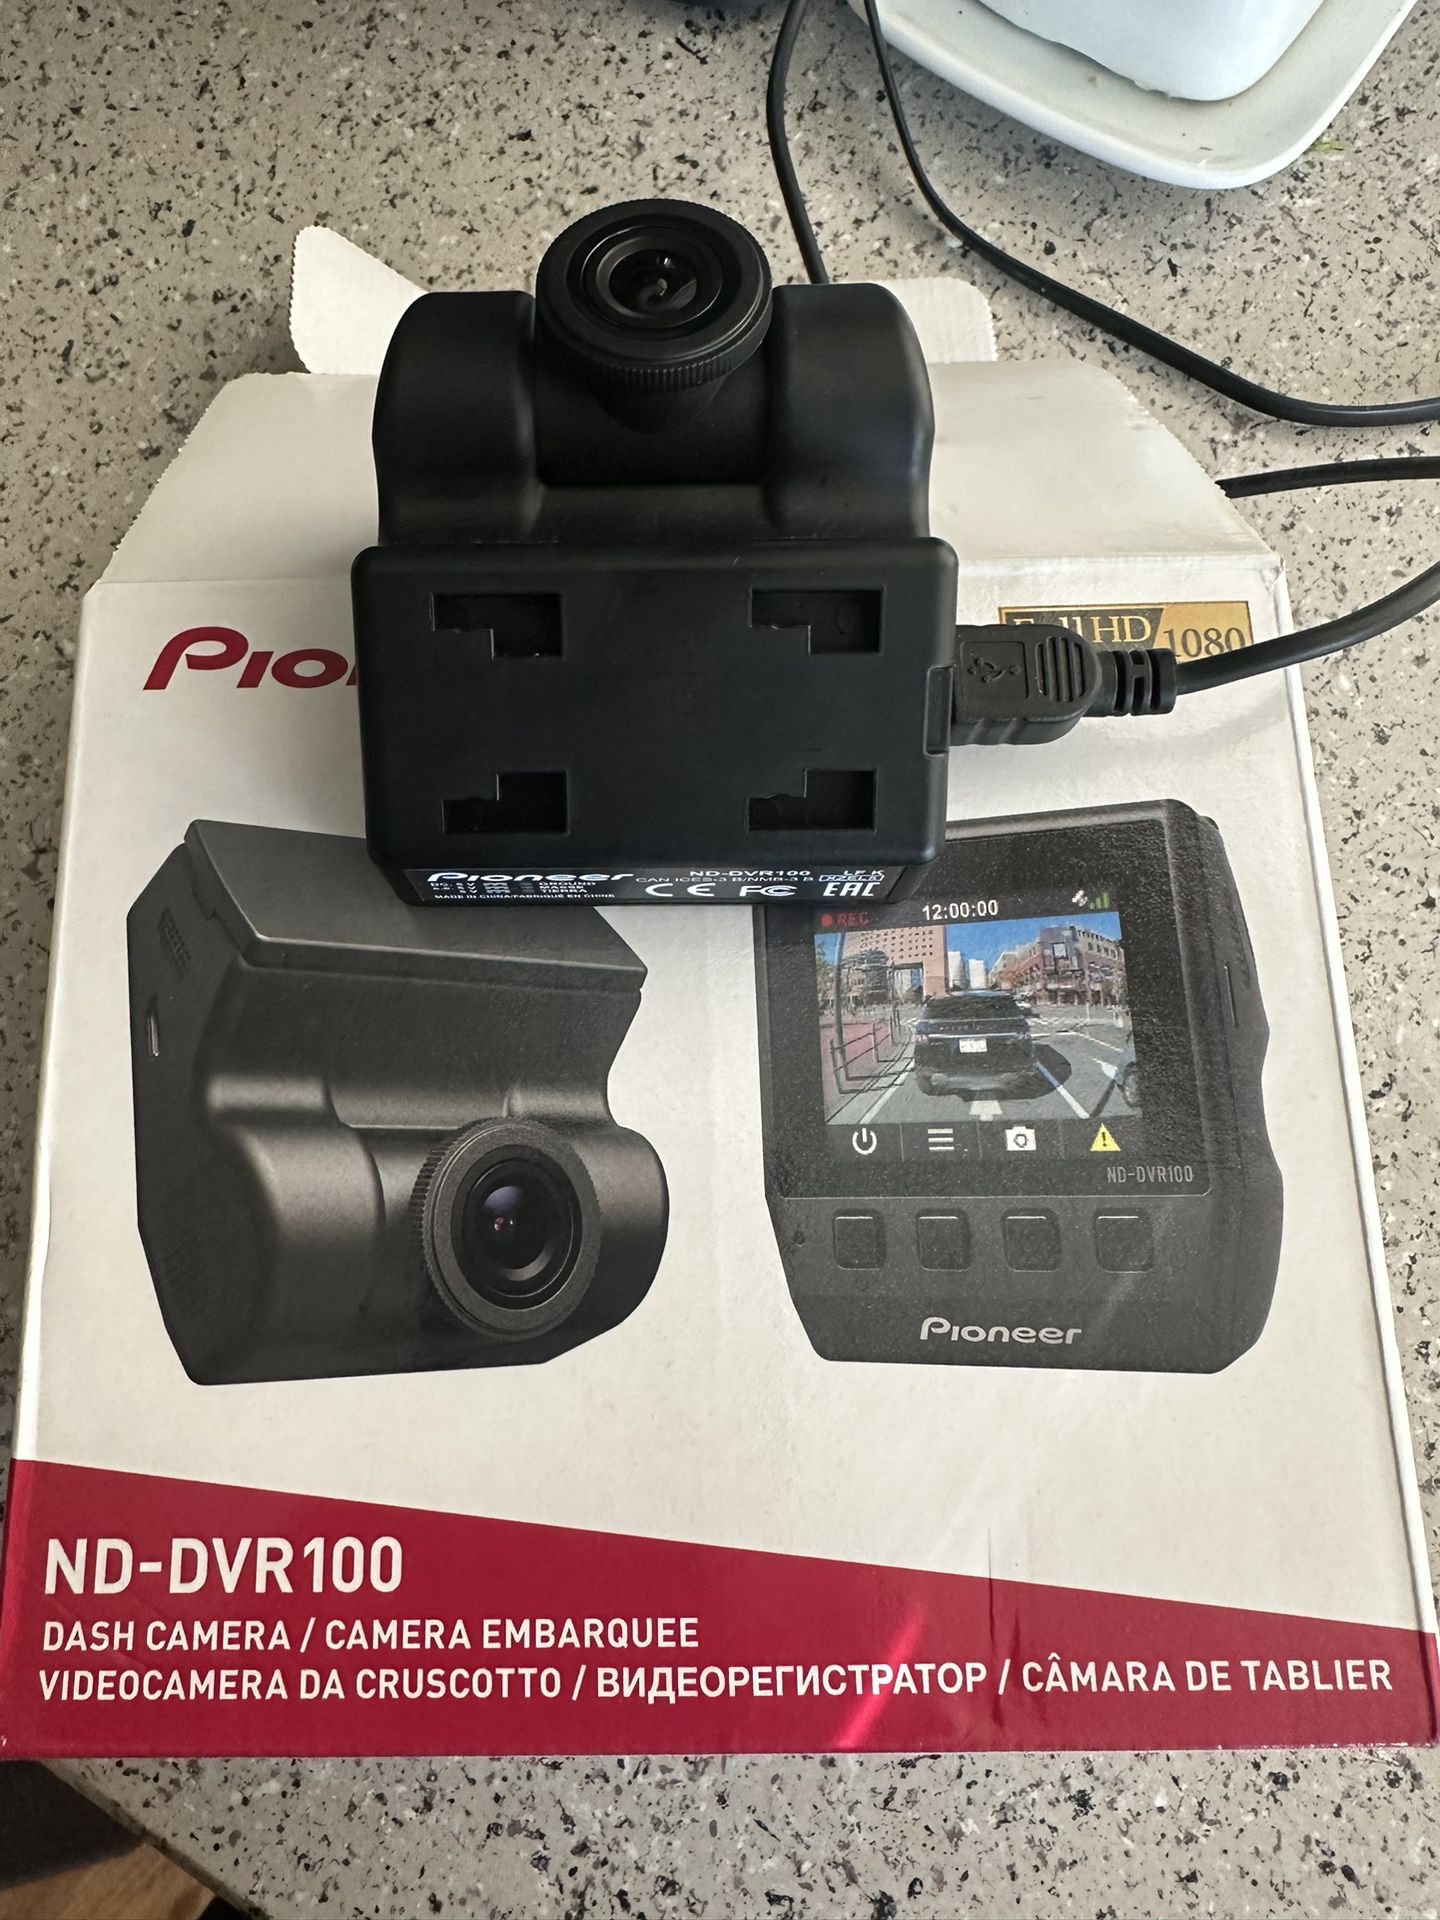 Pioneer ND-DVR100 Dash Camera